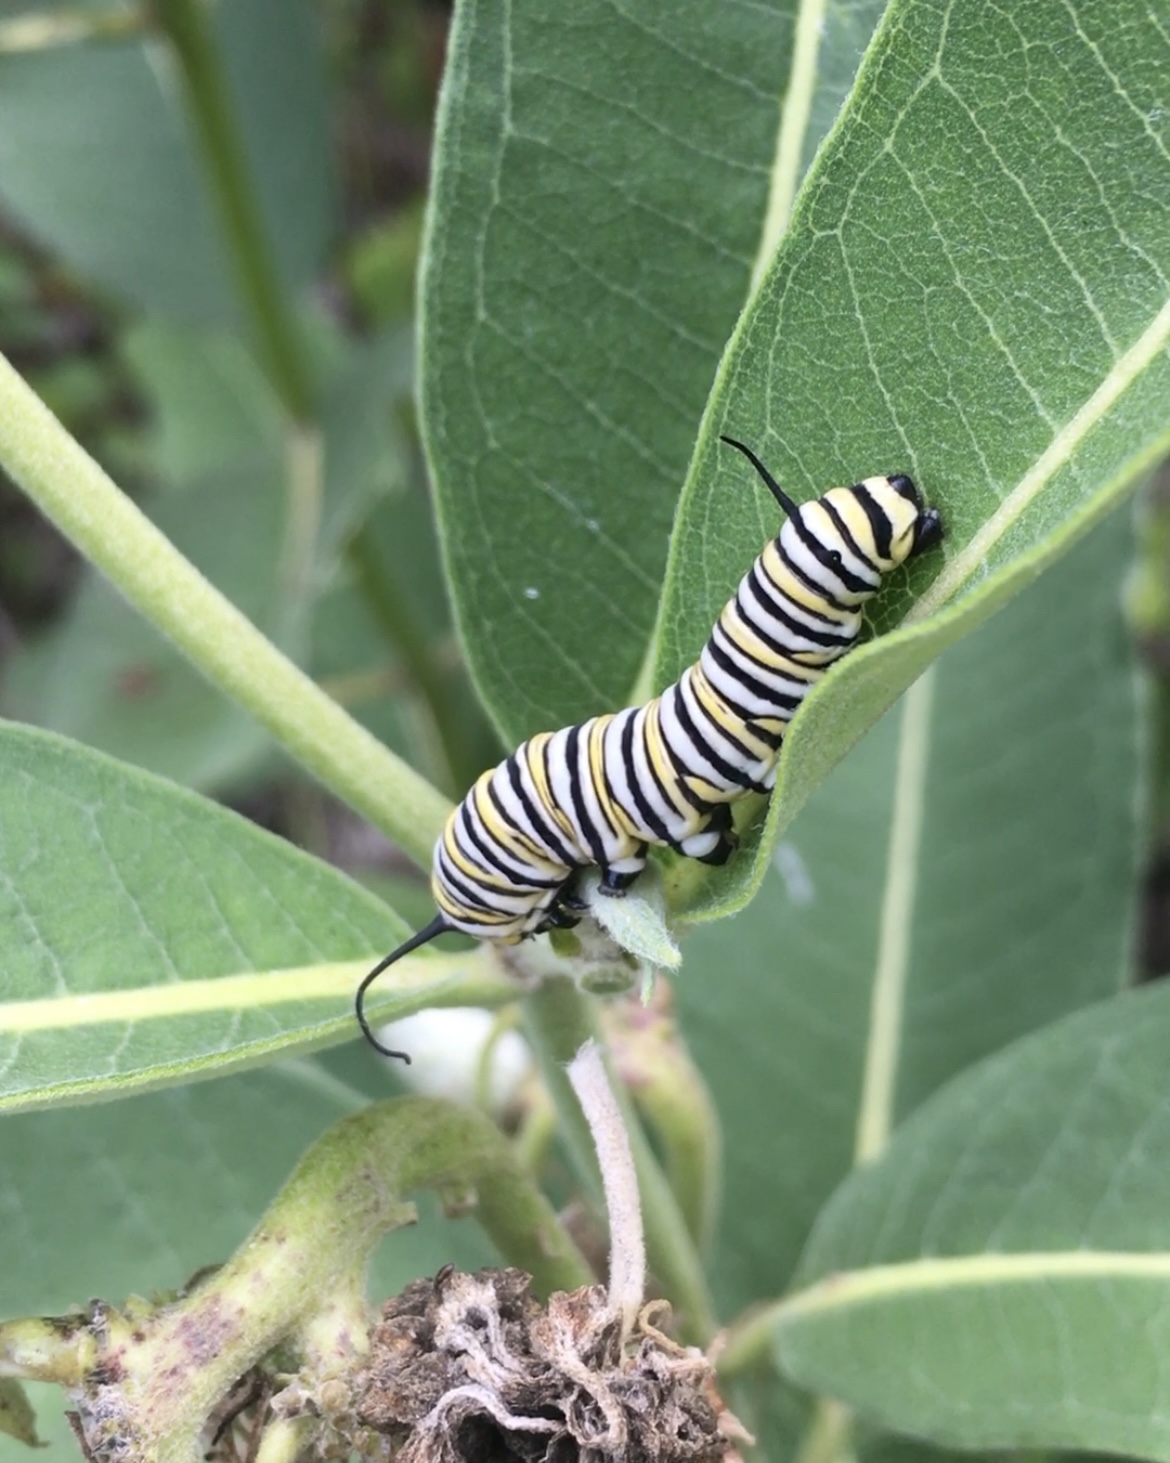 Monarch caterpillar eating milkweed leaves.